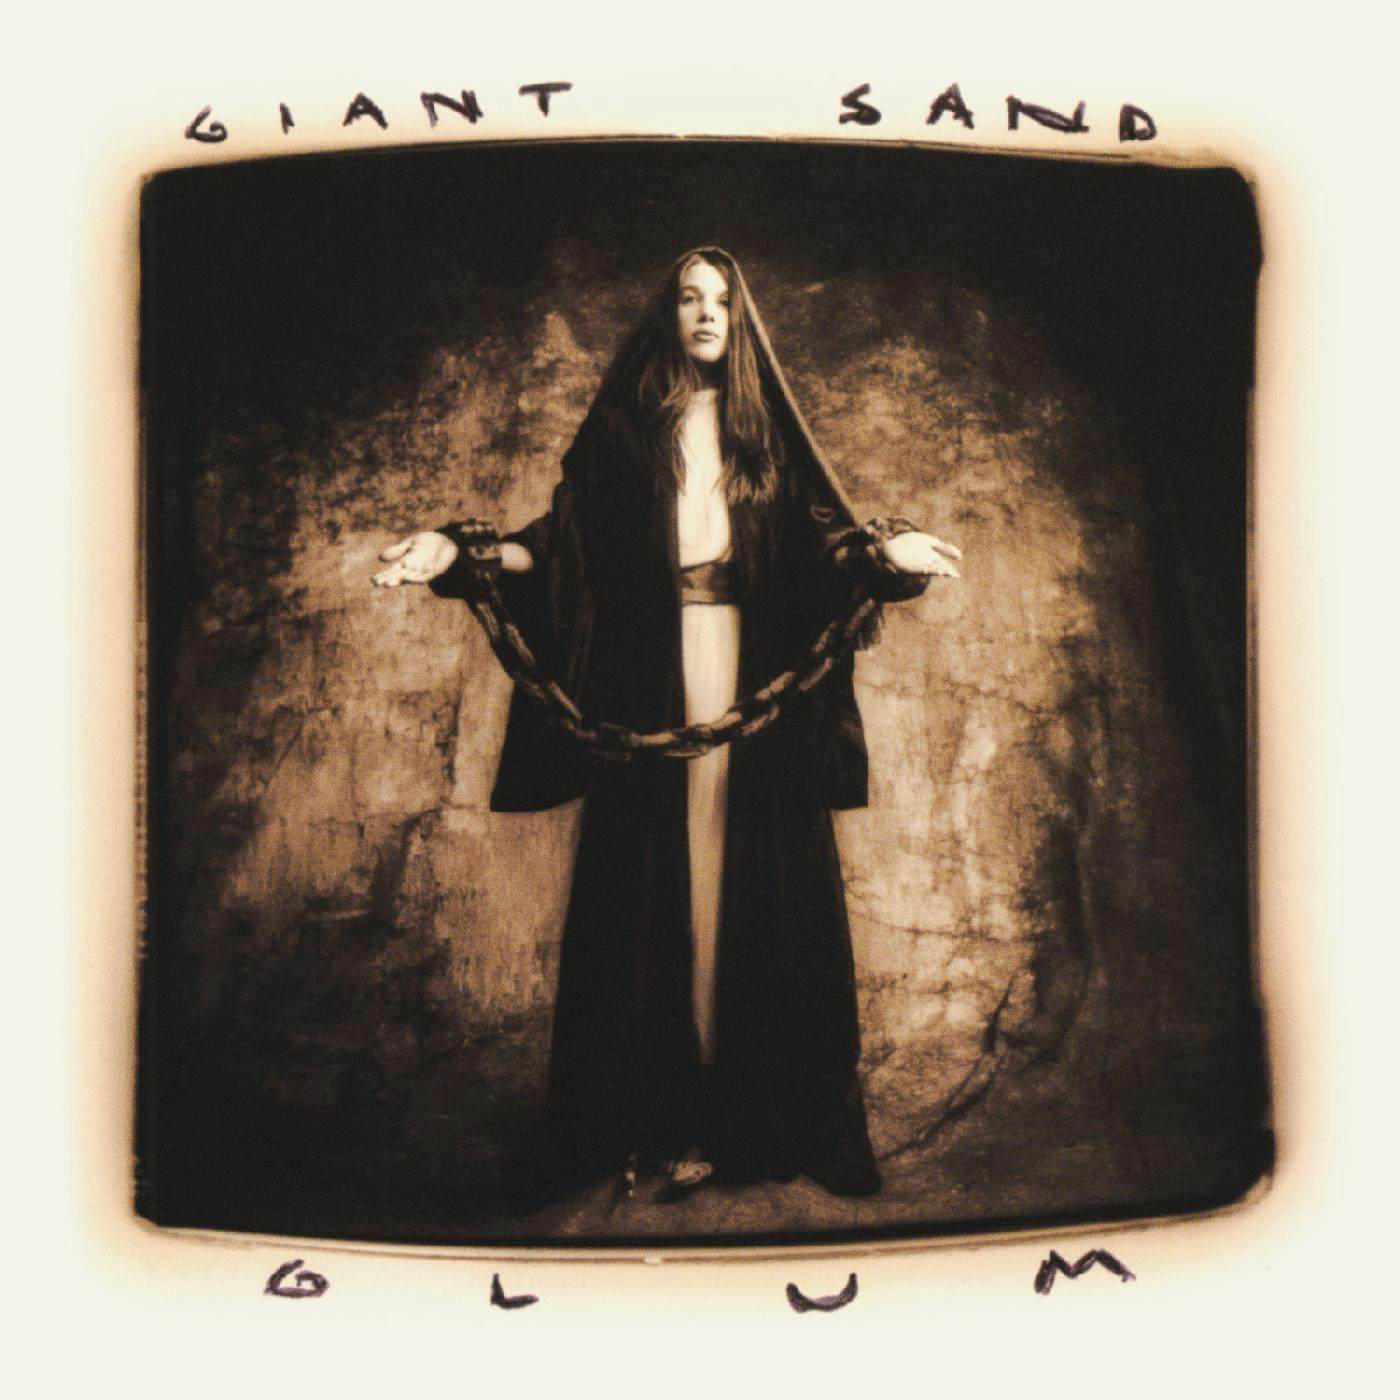 Giant Sand GLUM (25TH ANNIVERSARY EDITION) CD